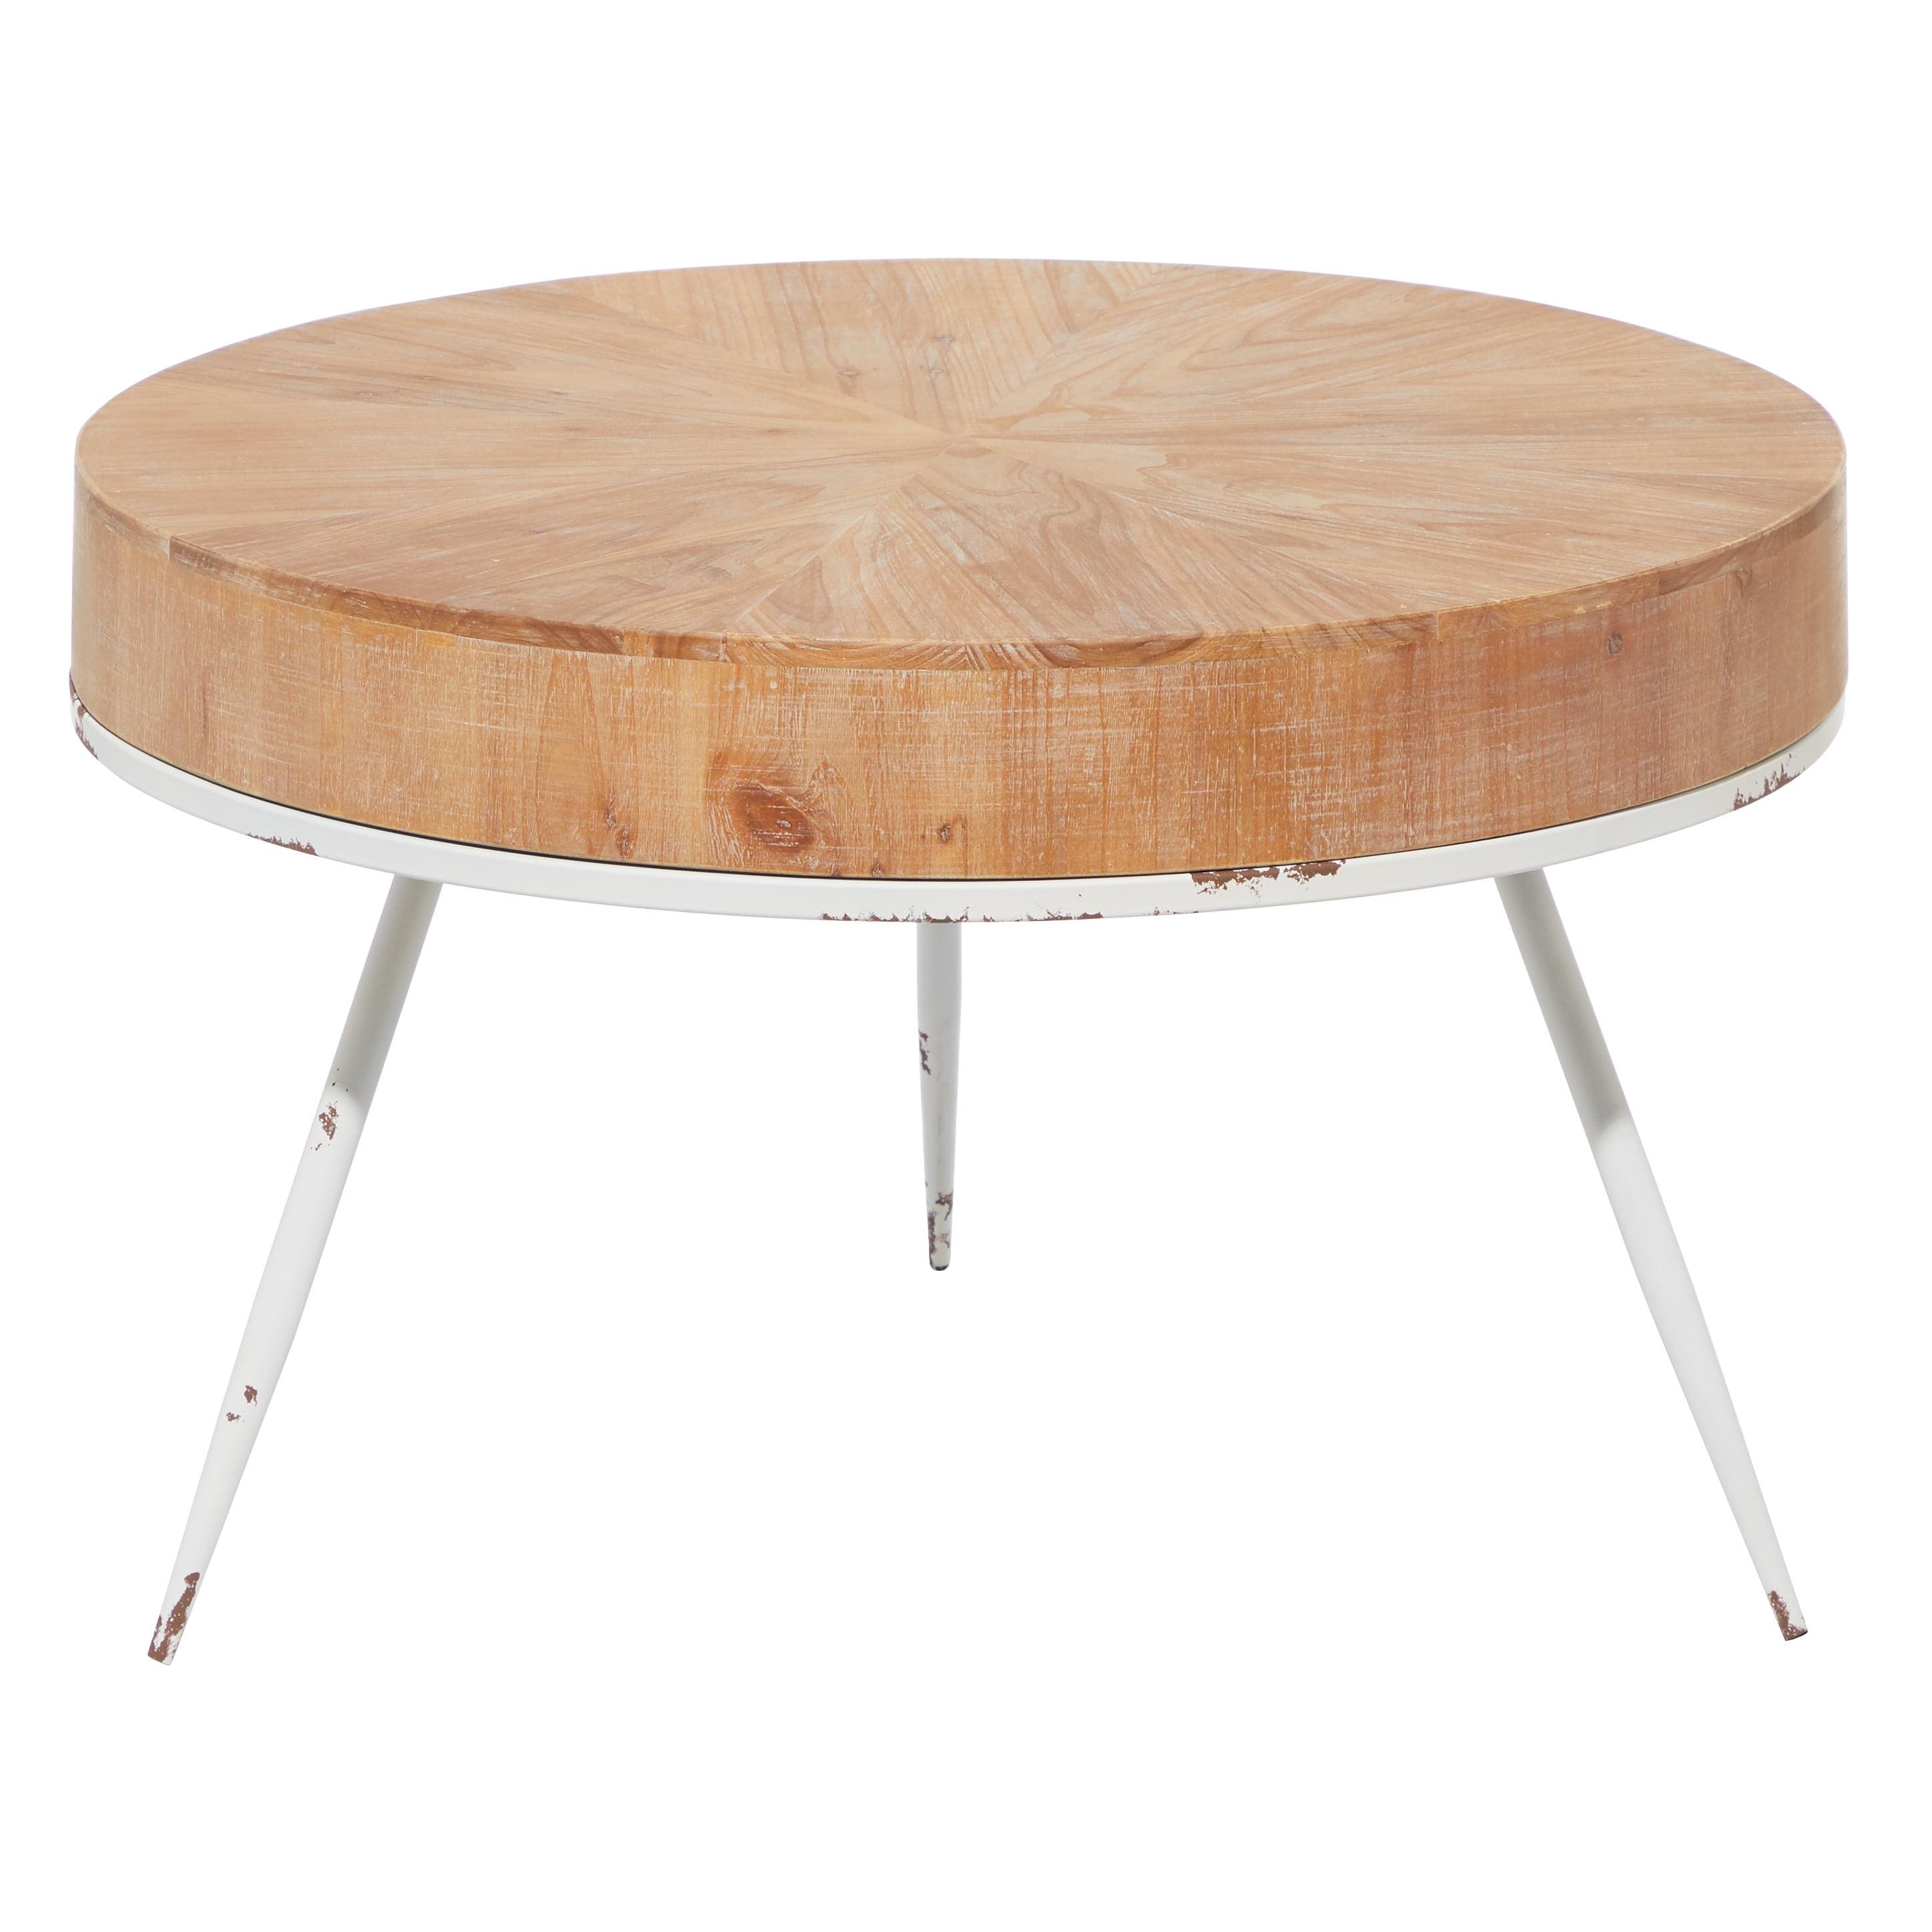 Modern Minimalist Round Coffee Table with White Distressed Iron Legs, 32"W